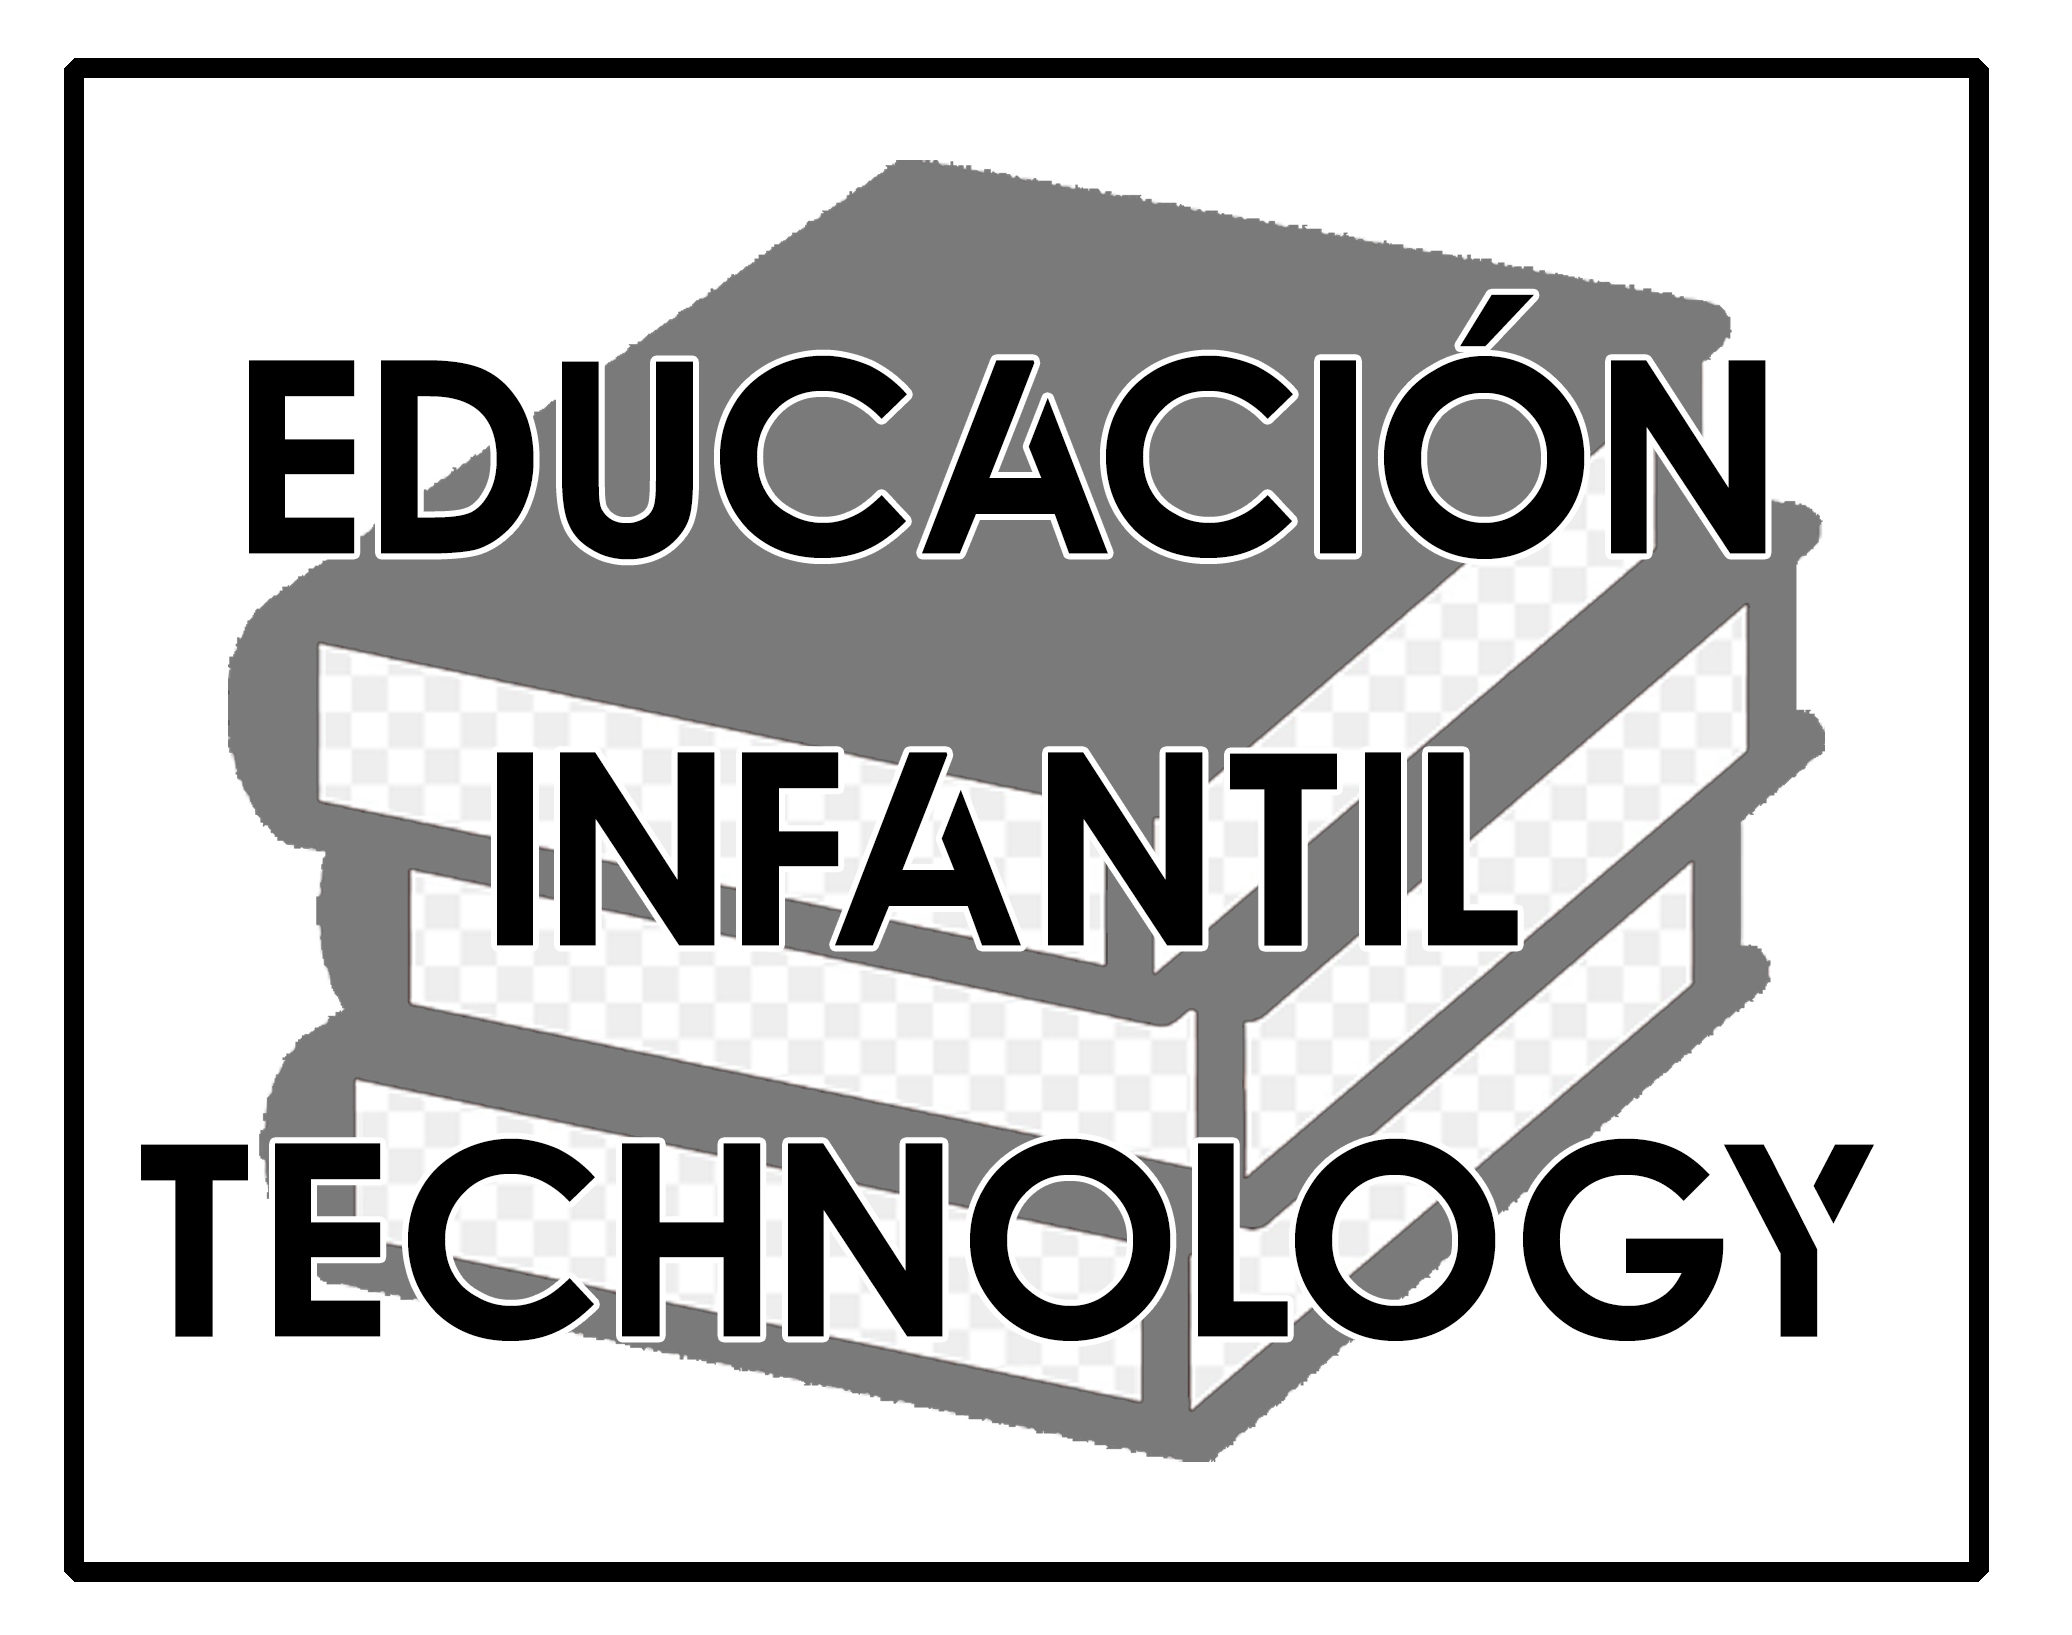 Educación Infantil Technology